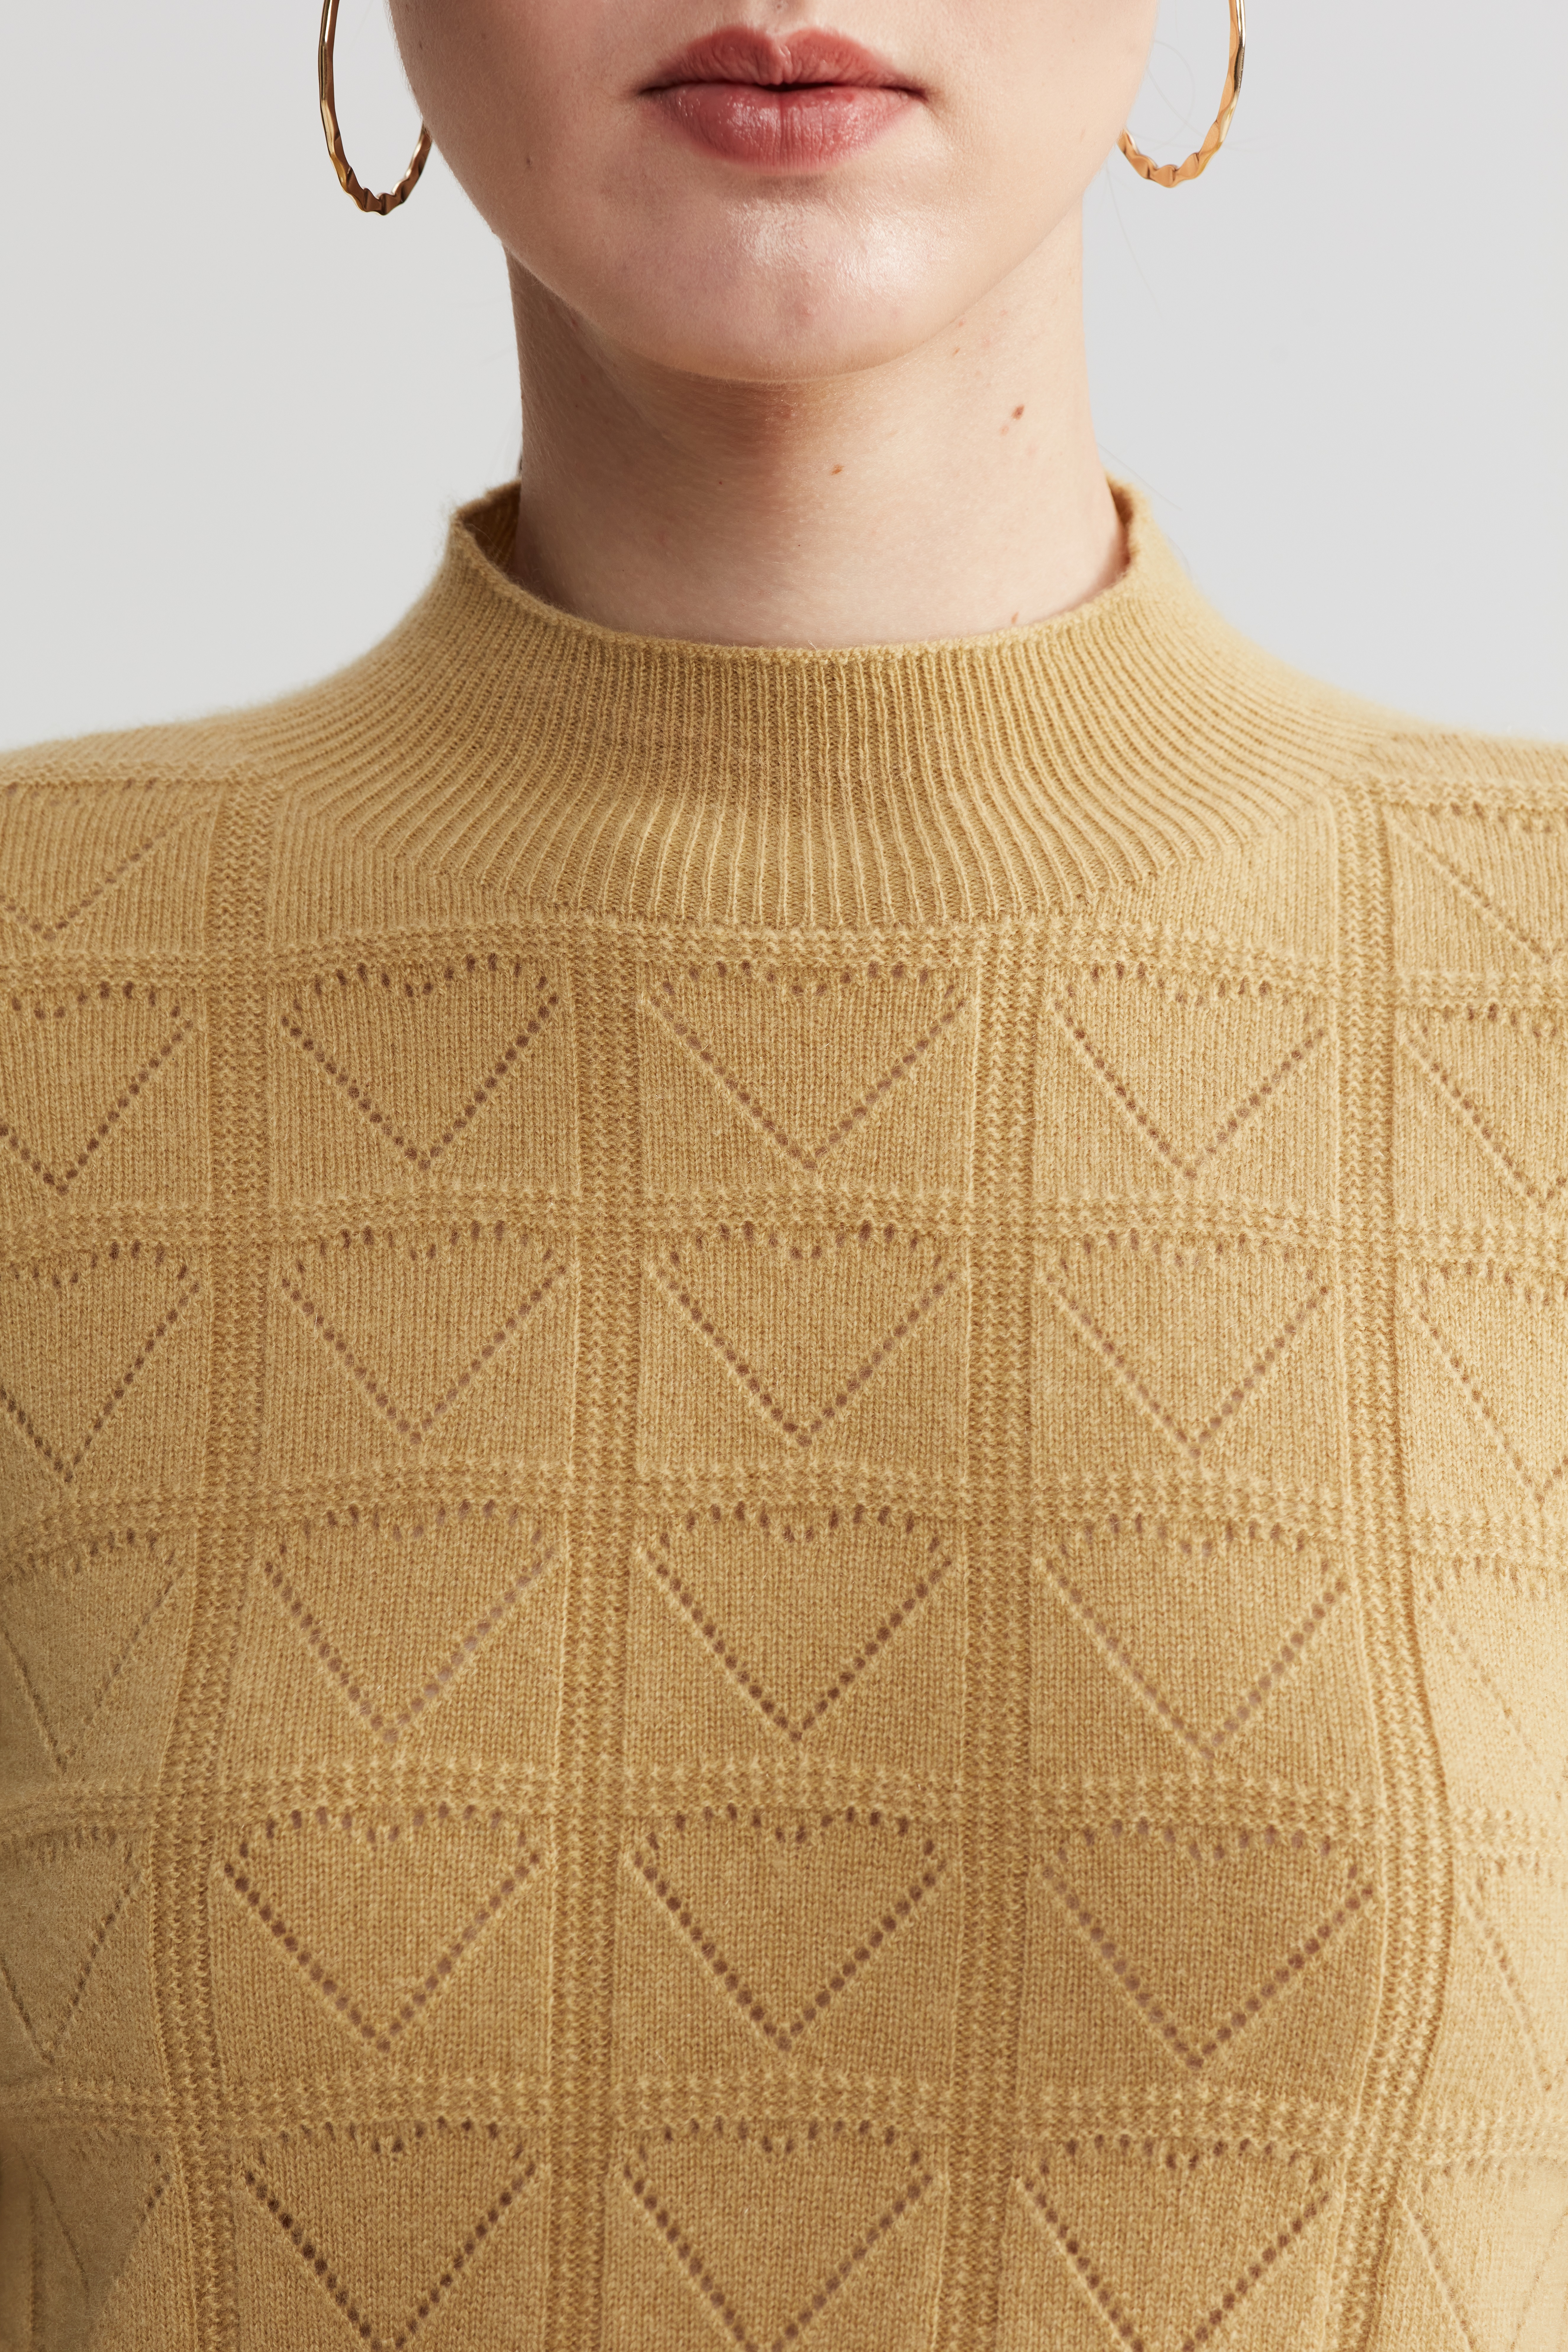 Seamless Plaid Mesh Stitch Pure Cashmere Sweater